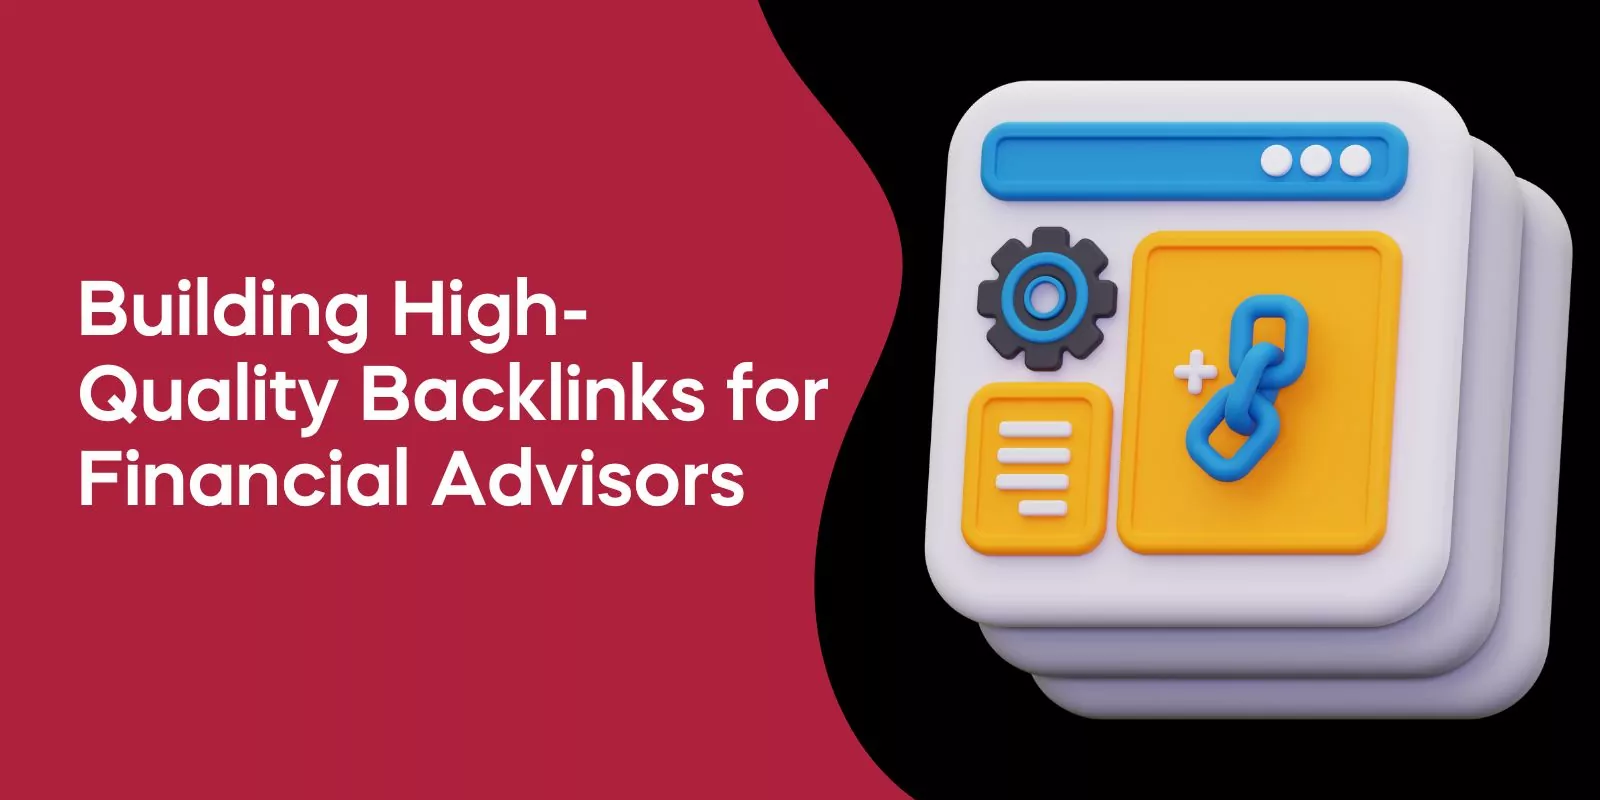 Building High-Quality Backlinks for Financial Advisors